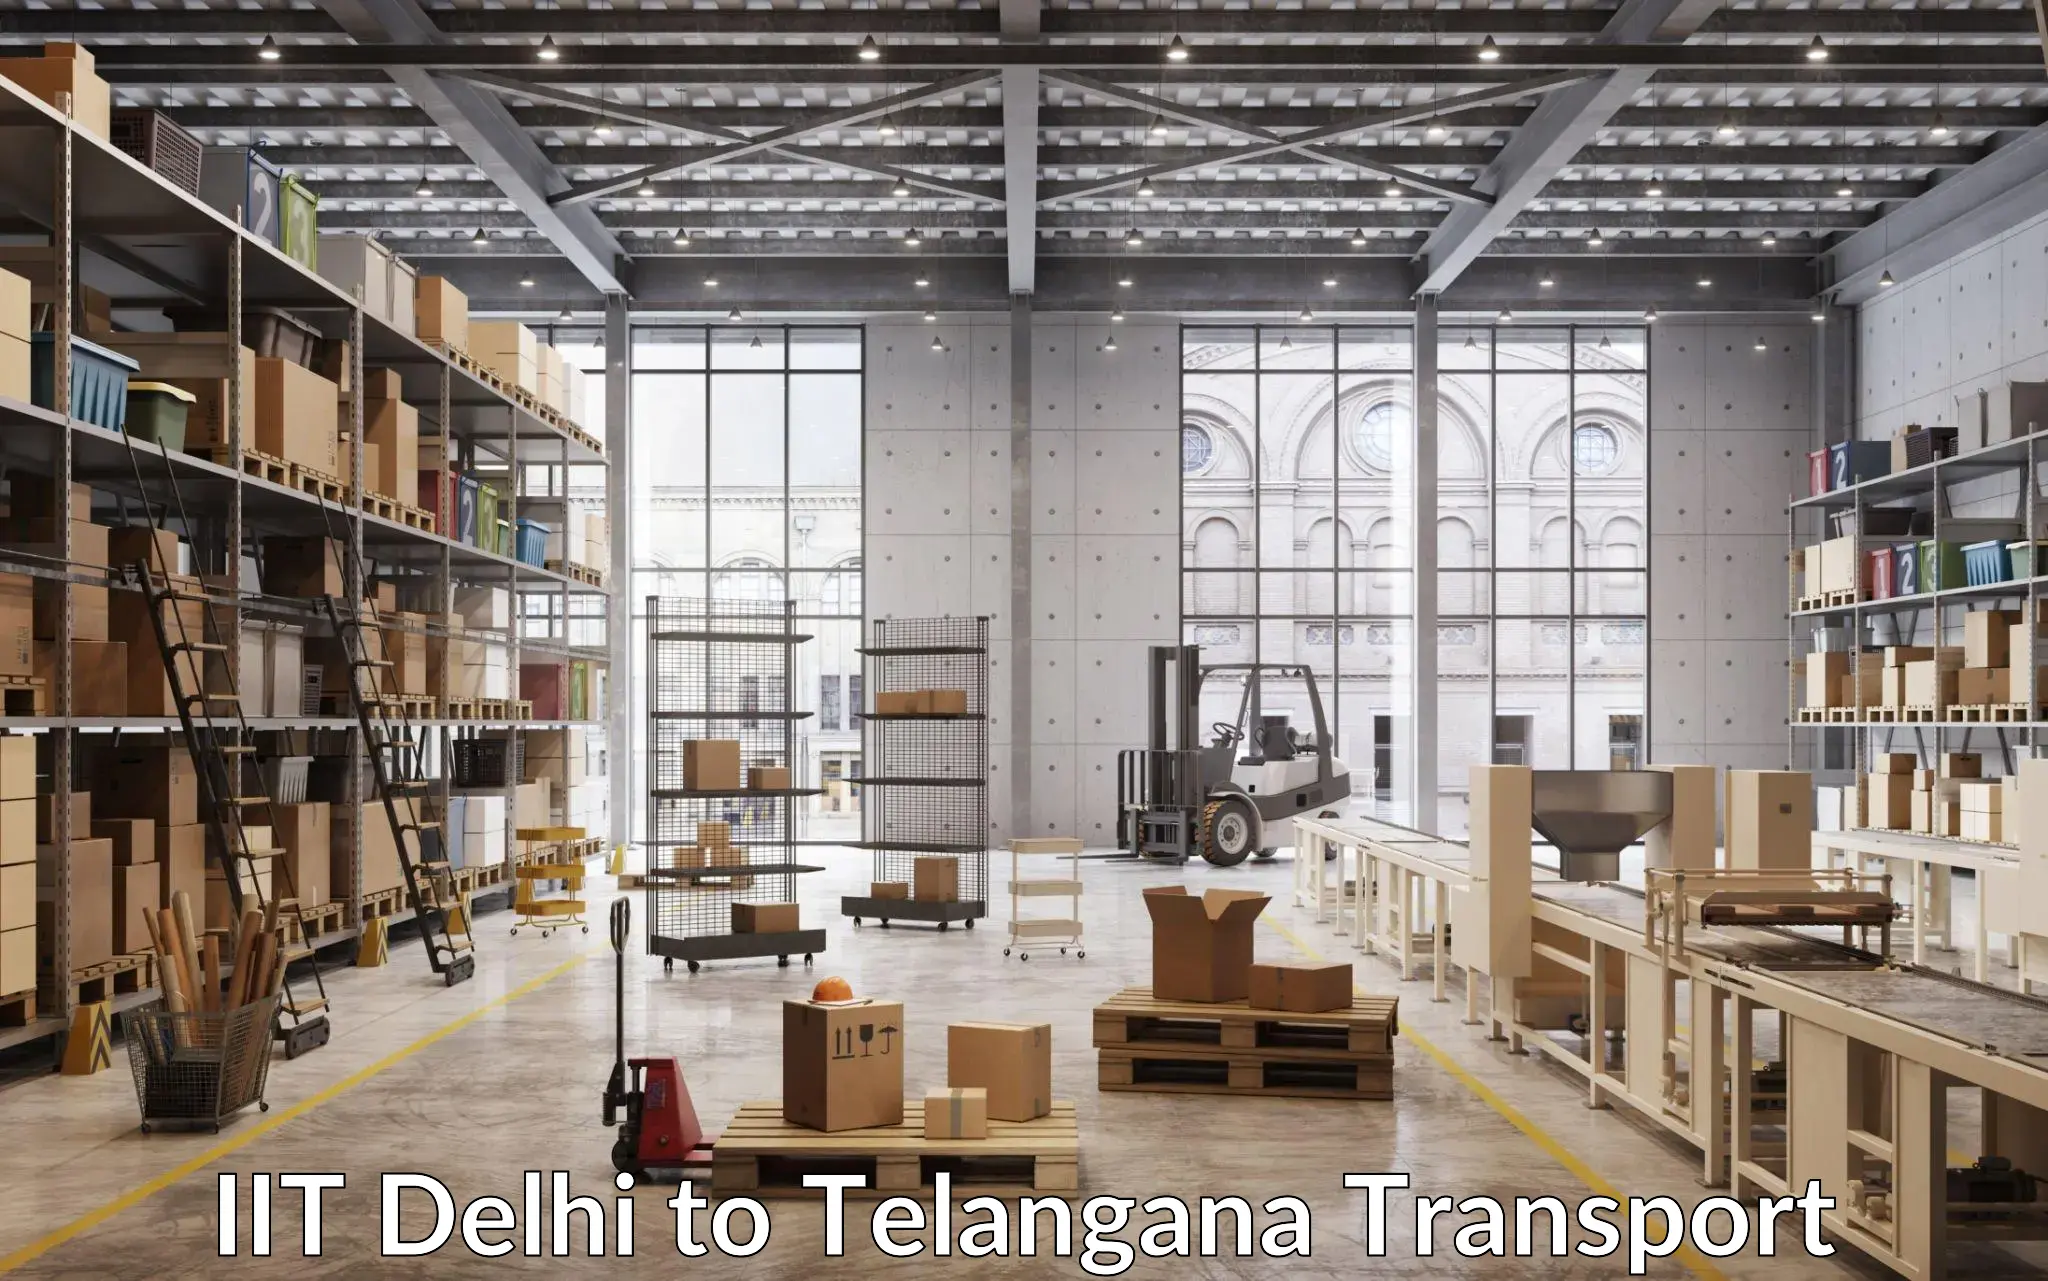 Online transport service IIT Delhi to Tallada